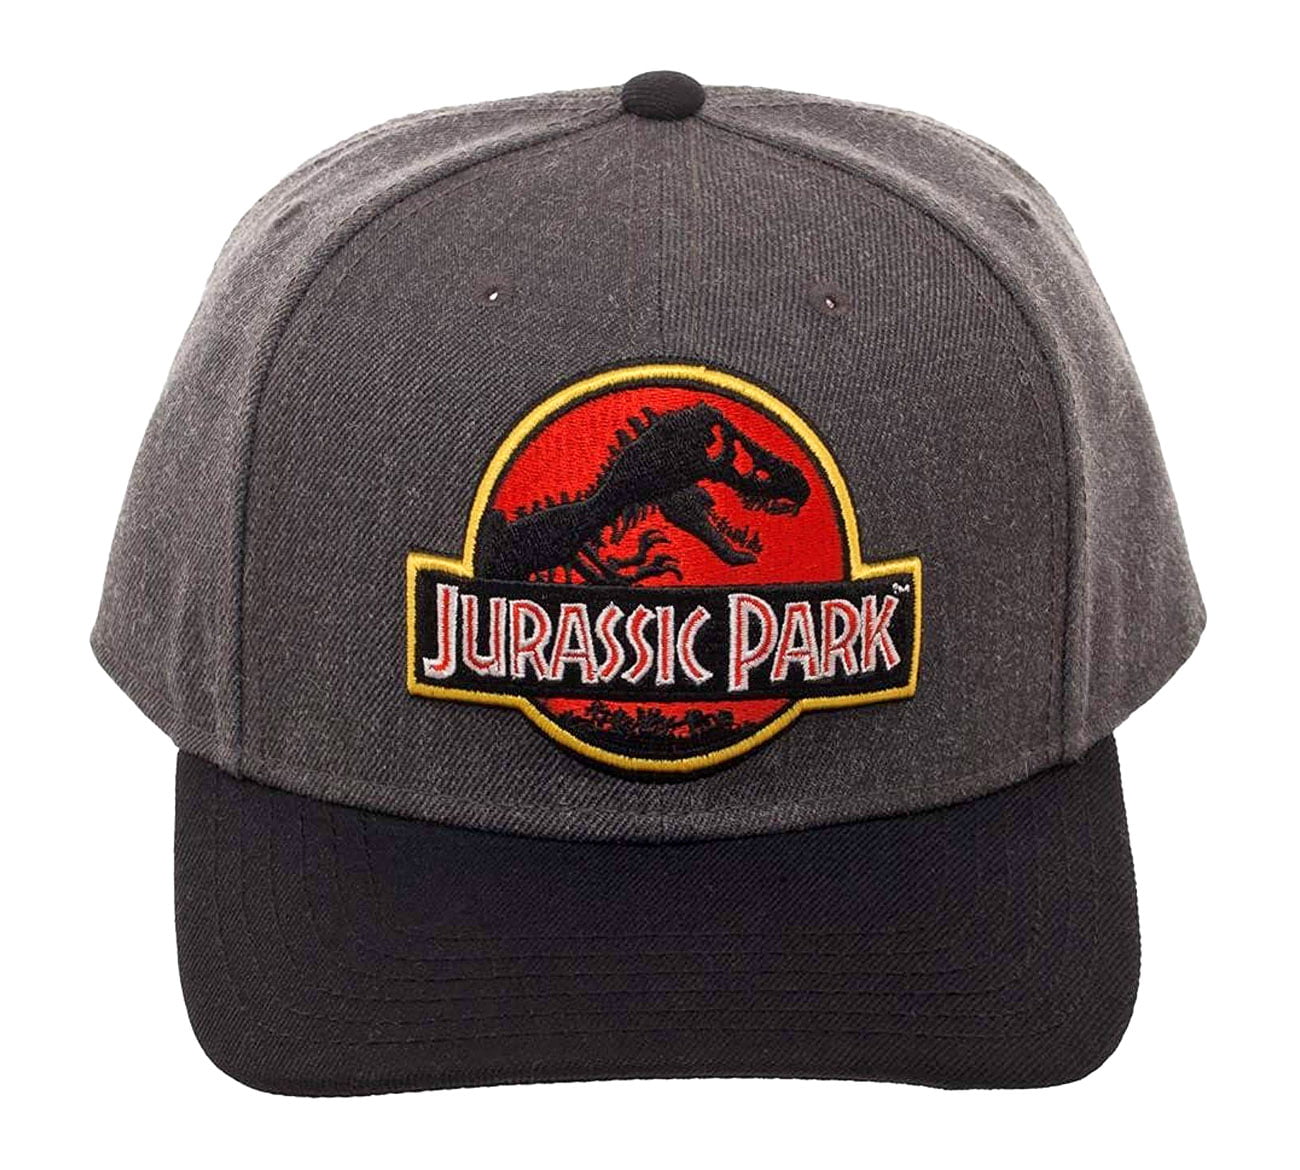 Jurassic Park Movie Logo Red Patch Flat Bill Snapback 2tone Mesh Back Cap Hat 